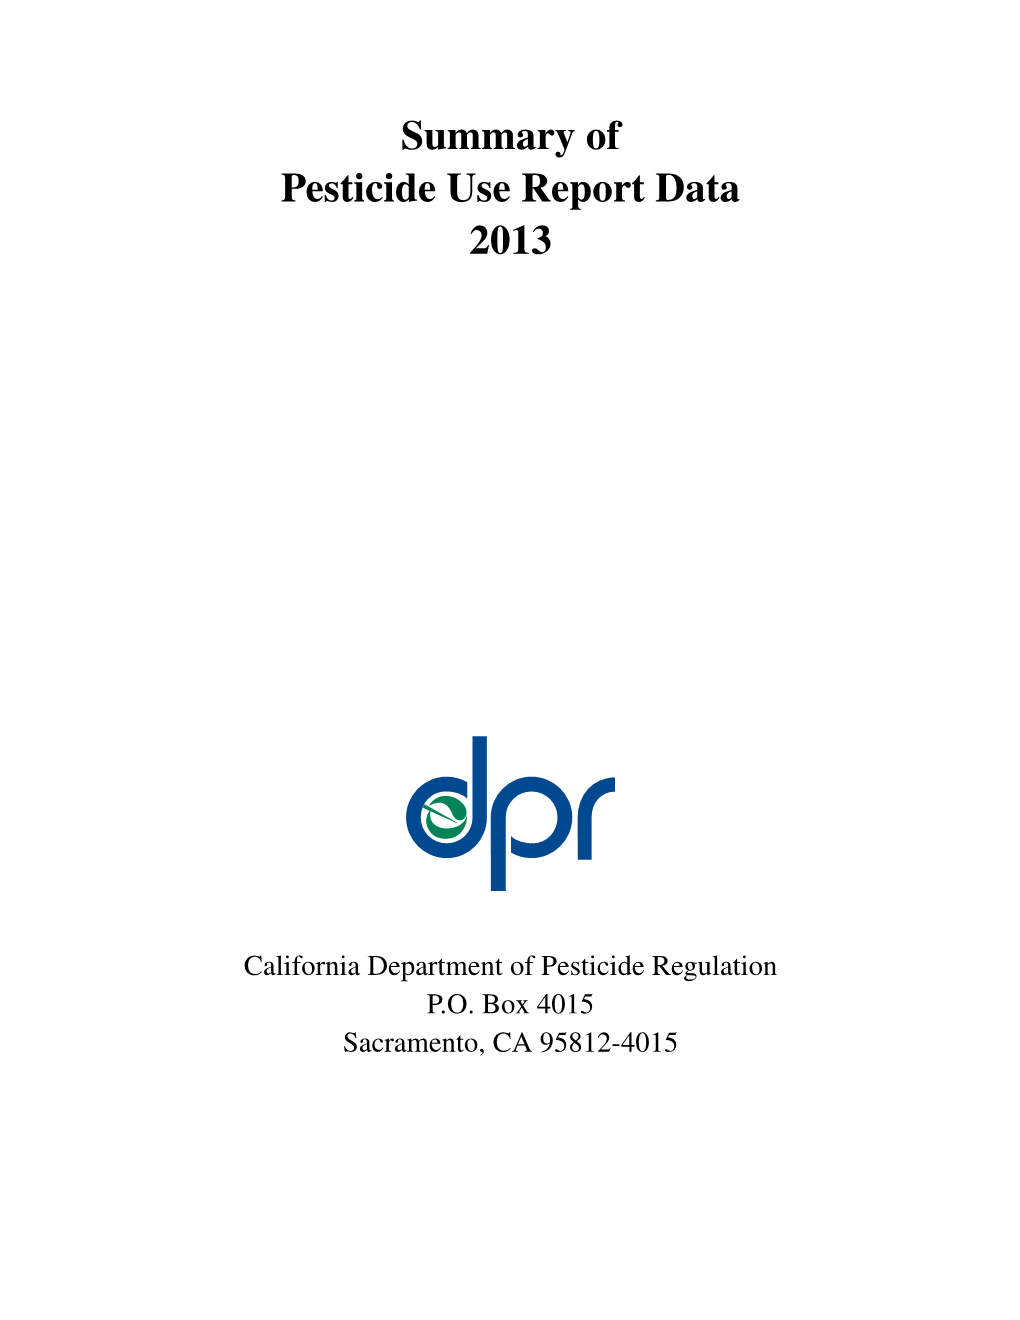 Summary of Pesticide Use Report Data 2013